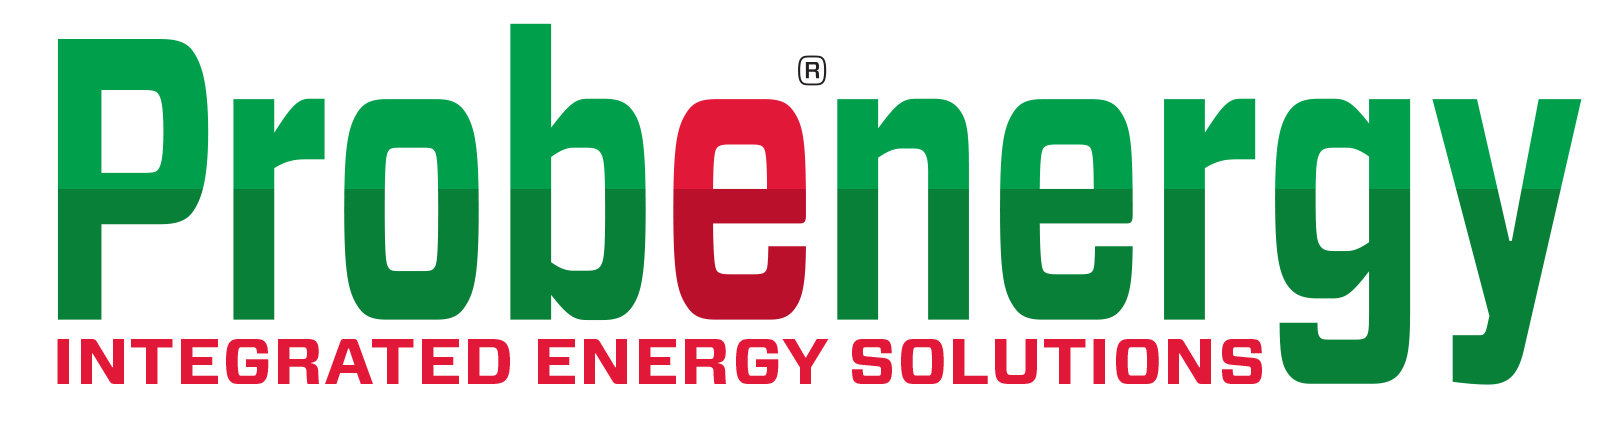 ProbEnergy_Logo_Final